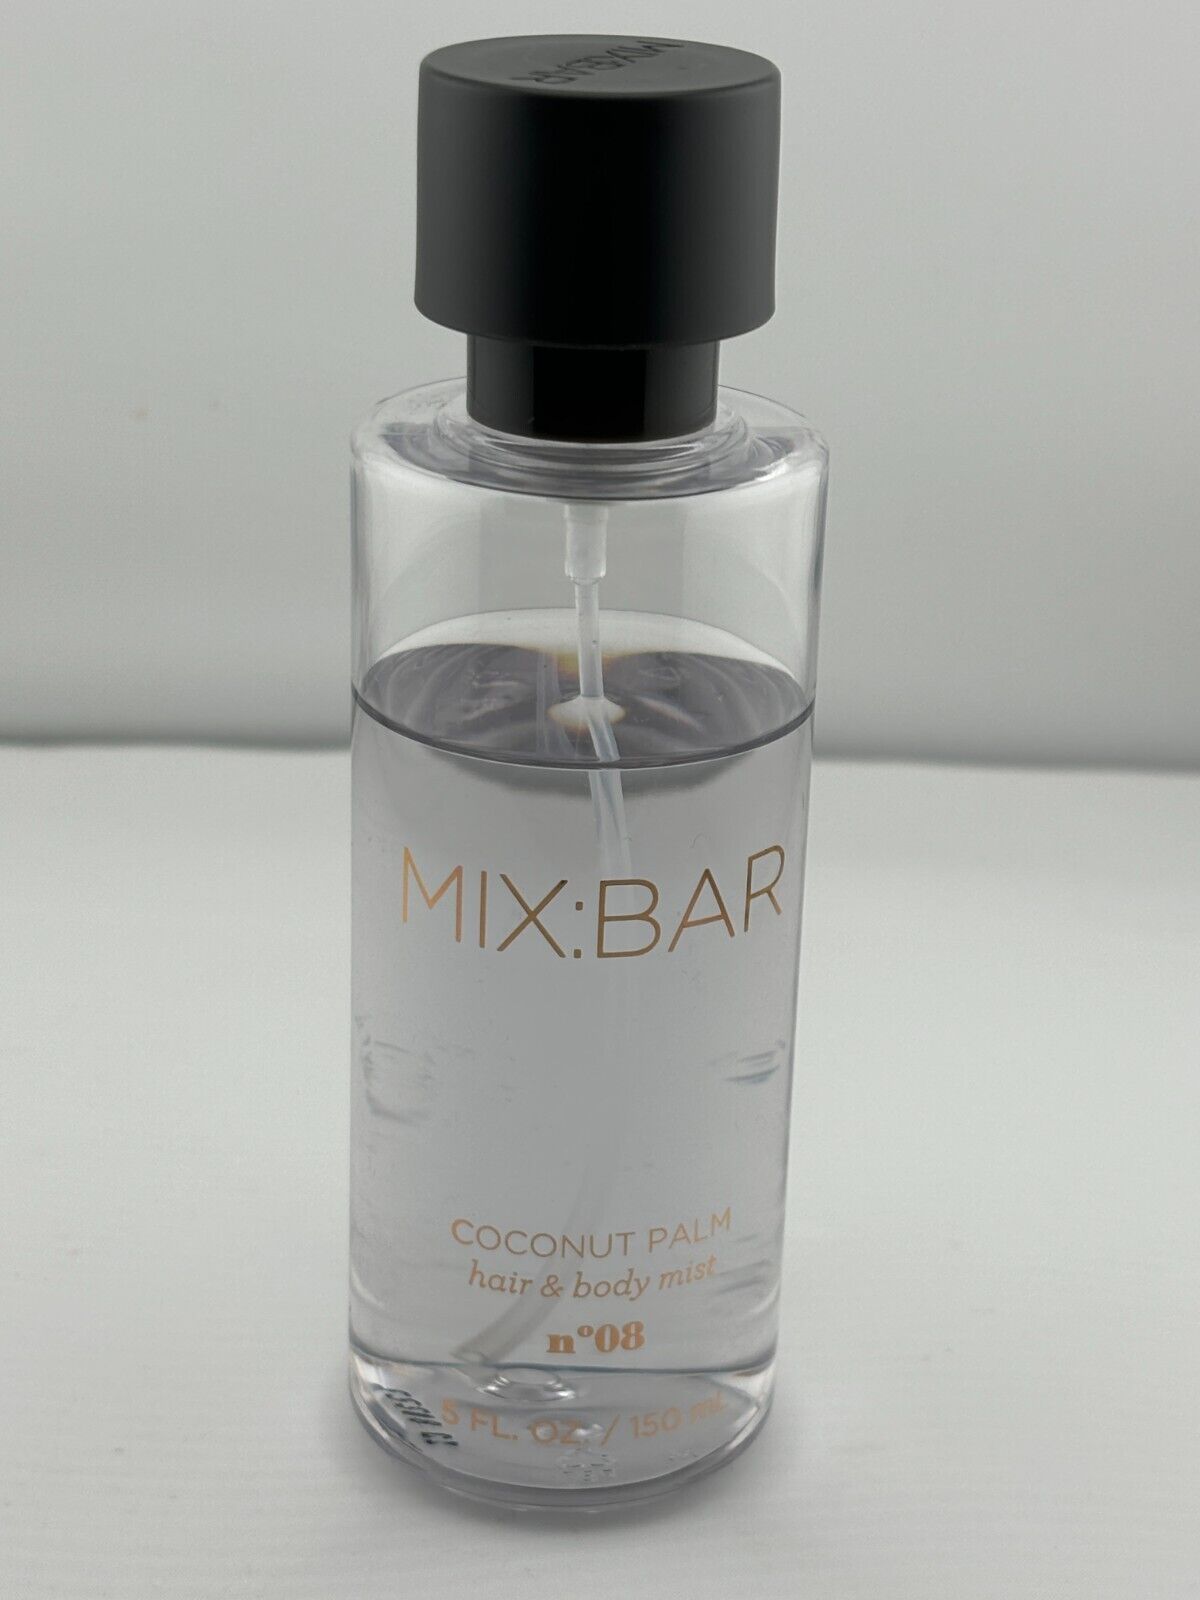 Mix-Bar COCONUT PALM Hair & Body Mist Spray 5 oz /150 mL No 08 (70% full)